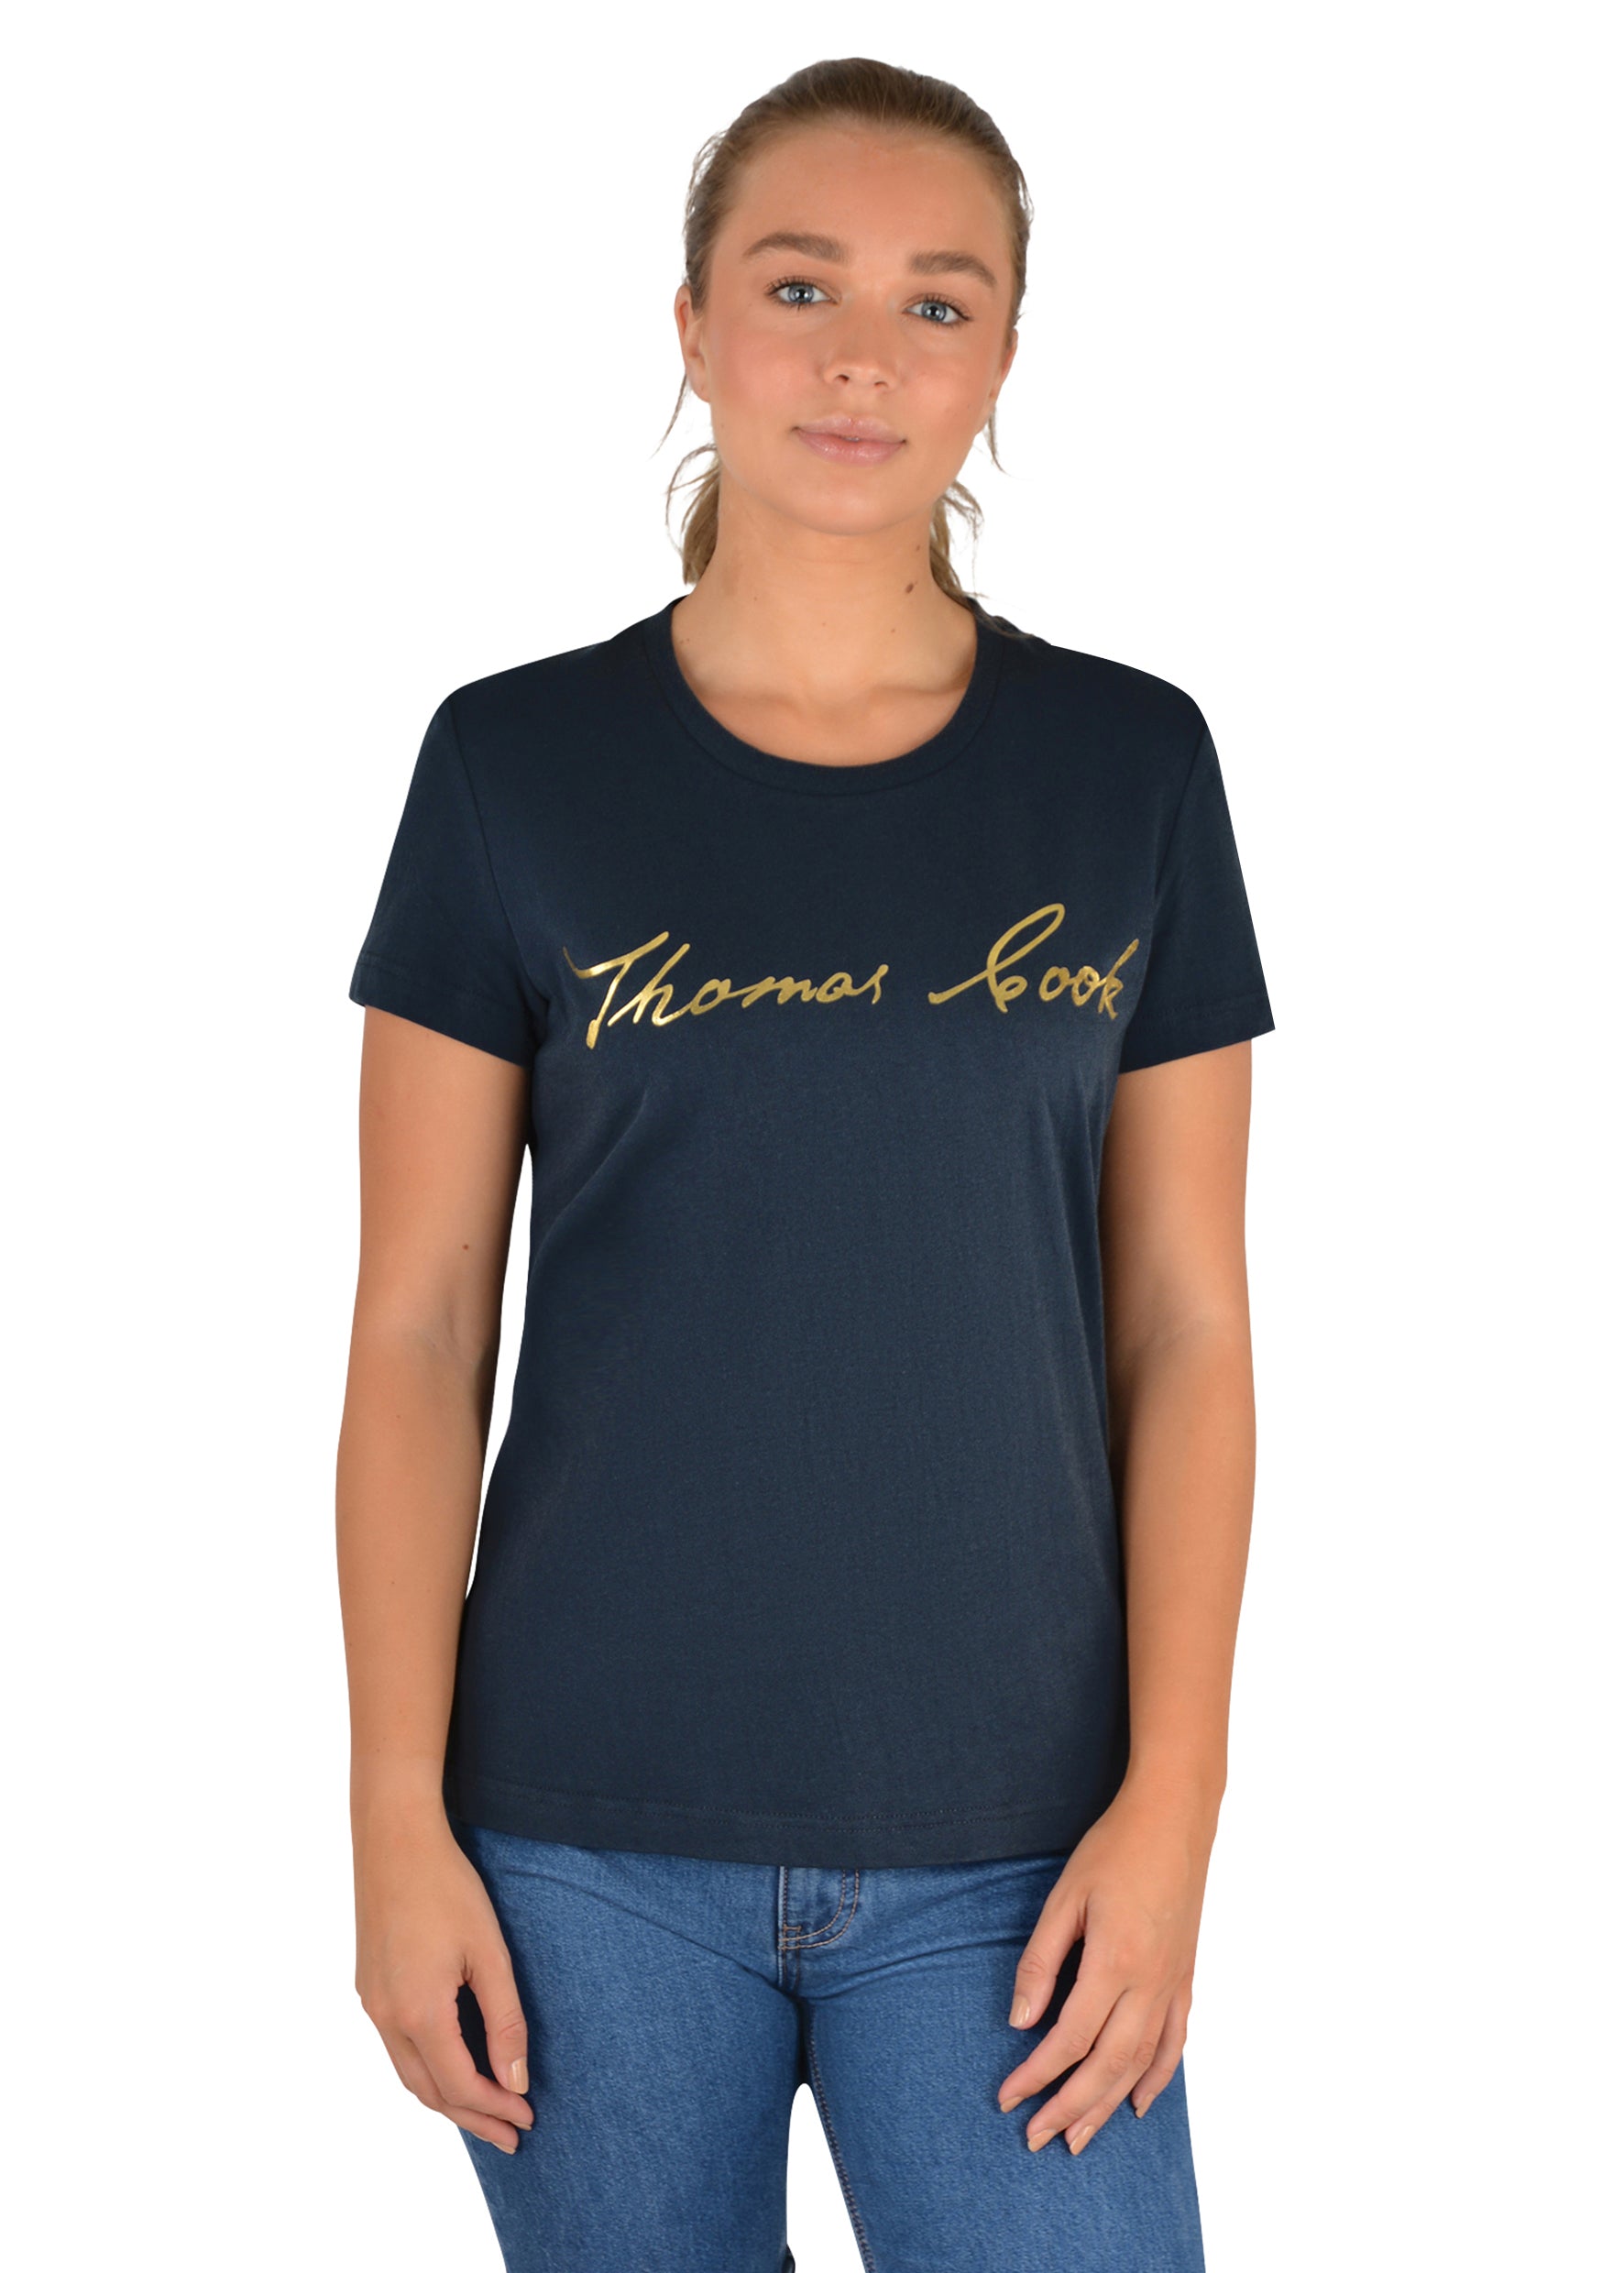 Womens Thomas Cook Script Tee Tshirt - White or Carbon (6785482227789)